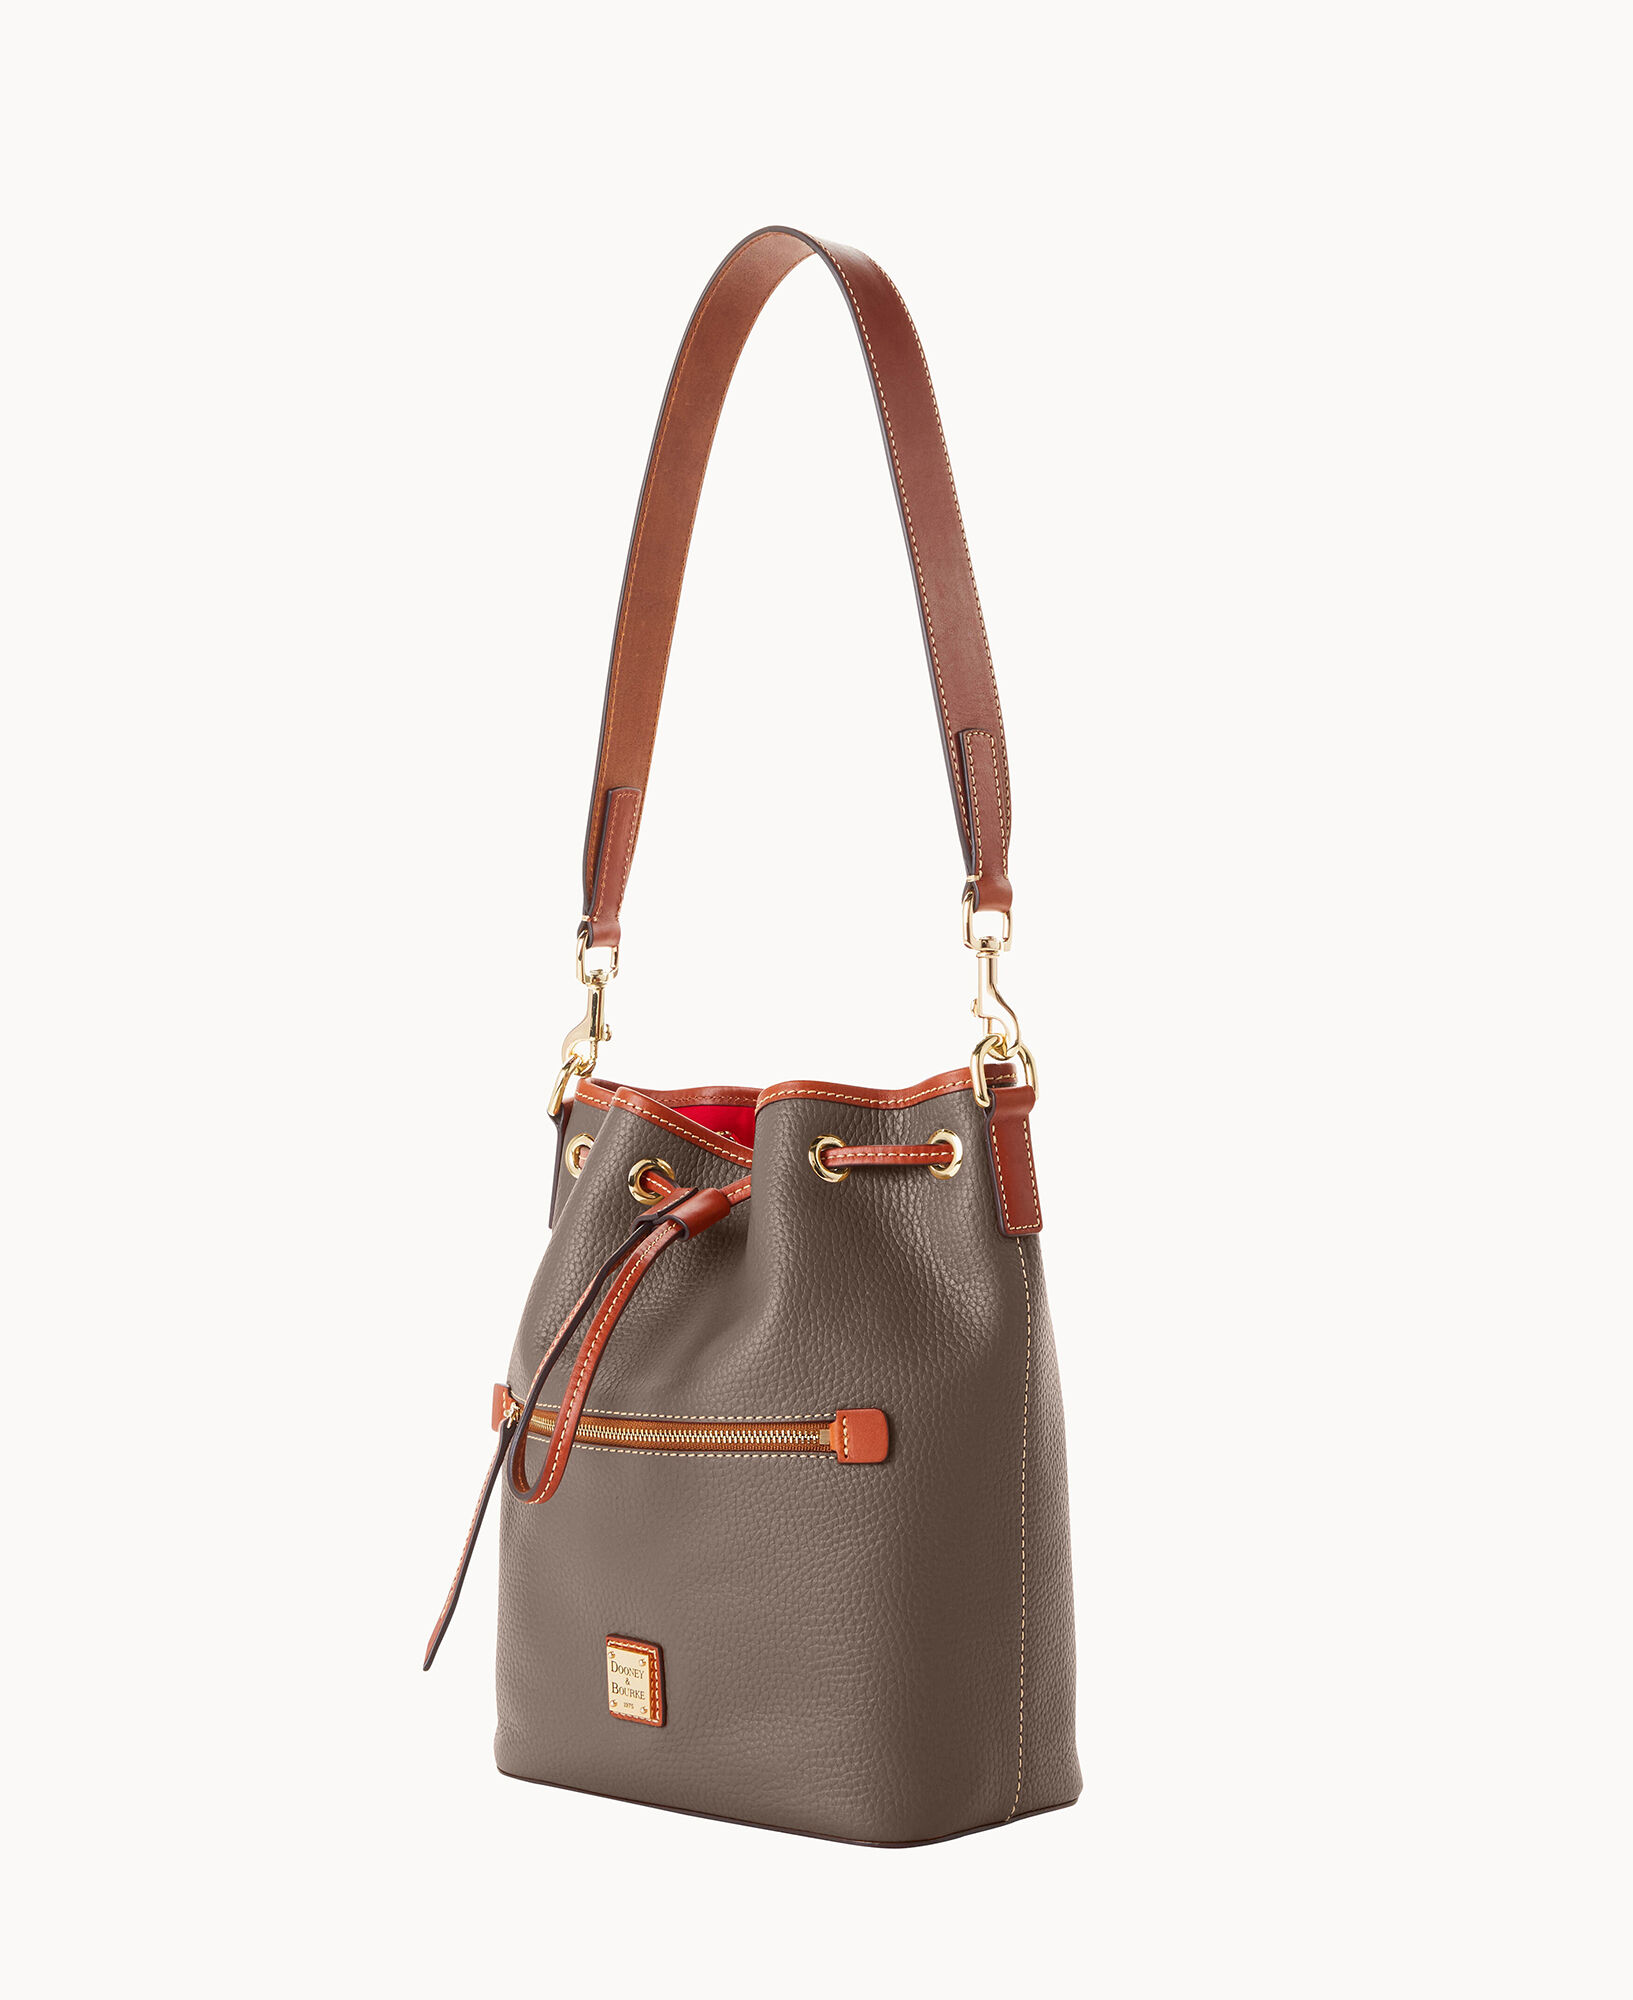 Dooney & Bourke Handbag, Pebble Grain Drawstring - Bark: Handbags